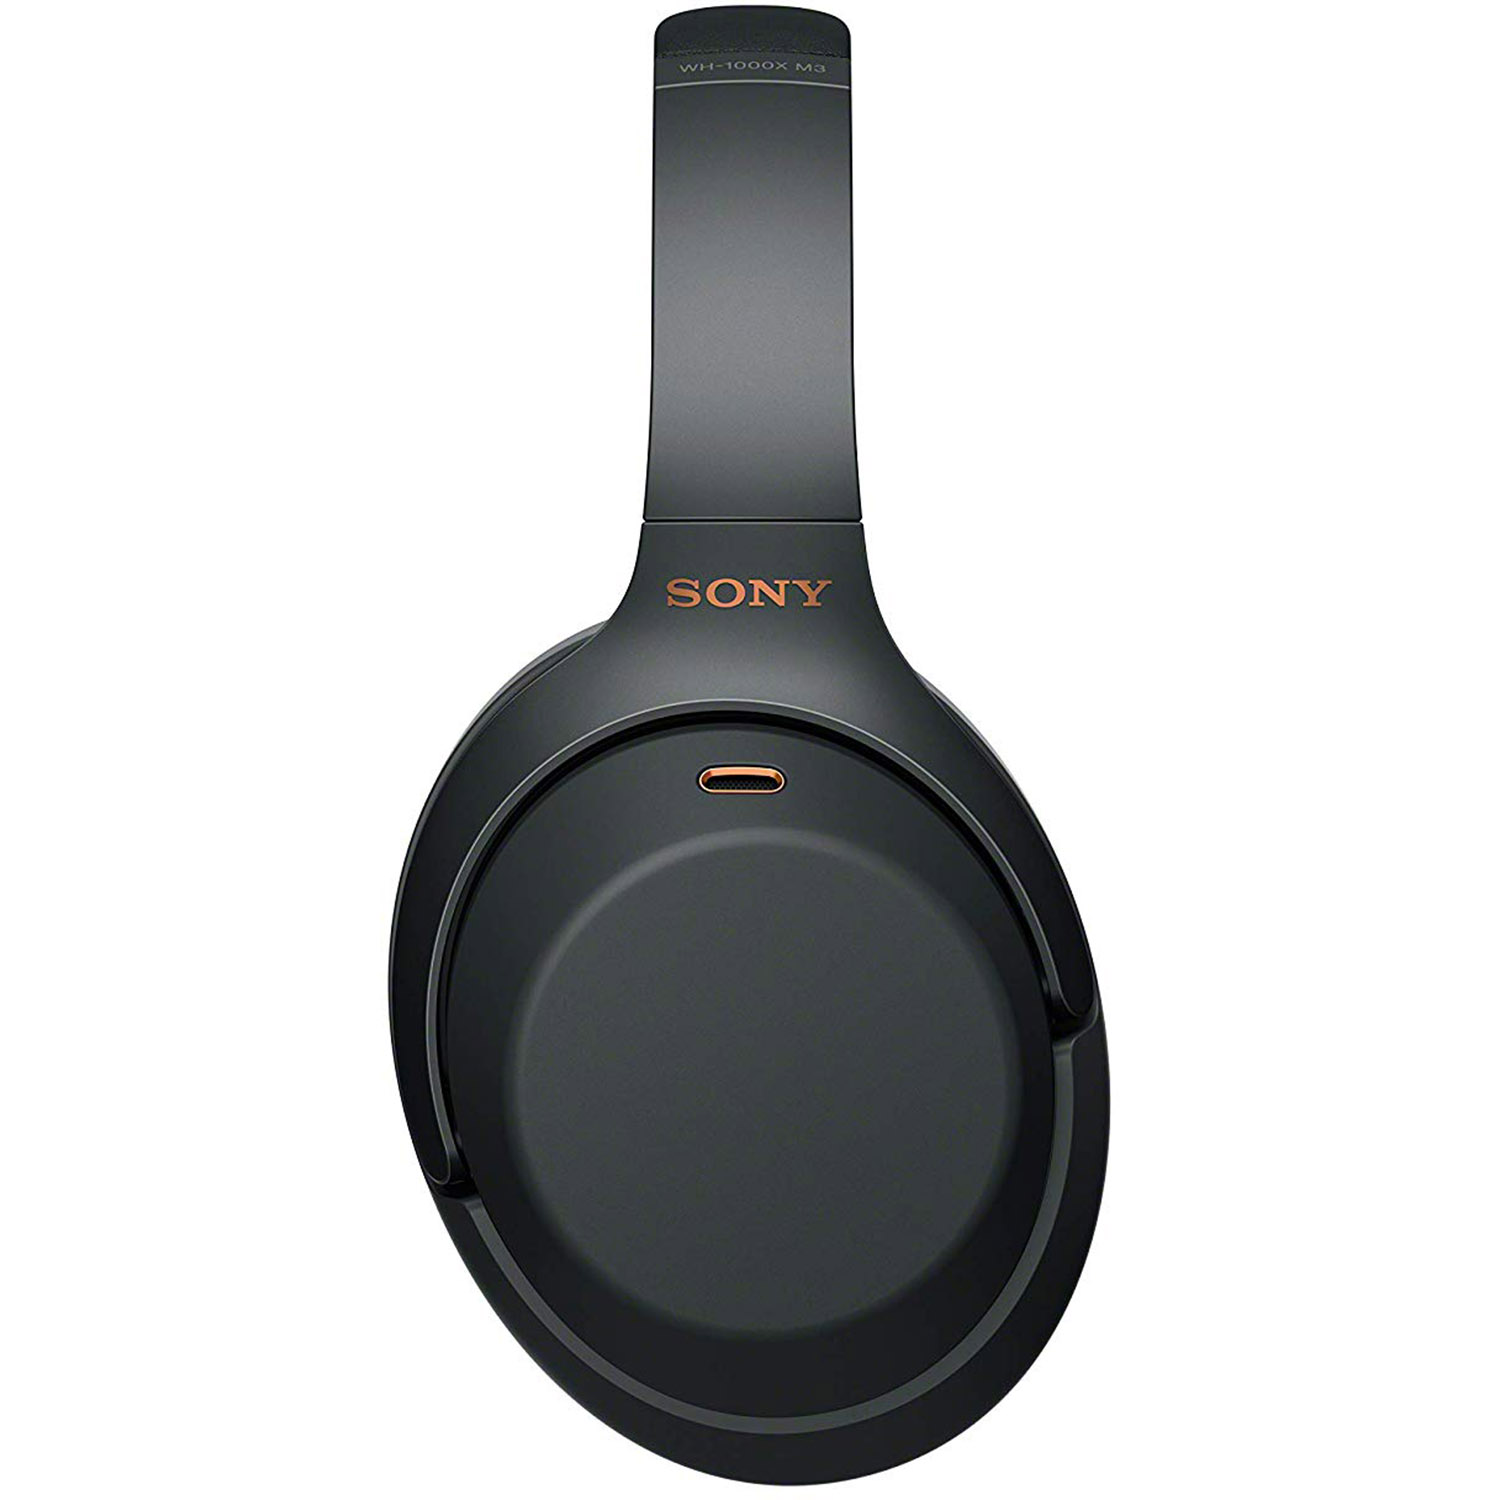 Sony Bluetooth Over-Ear Headphones, Black, WH1000XM3/B - image 5 of 6